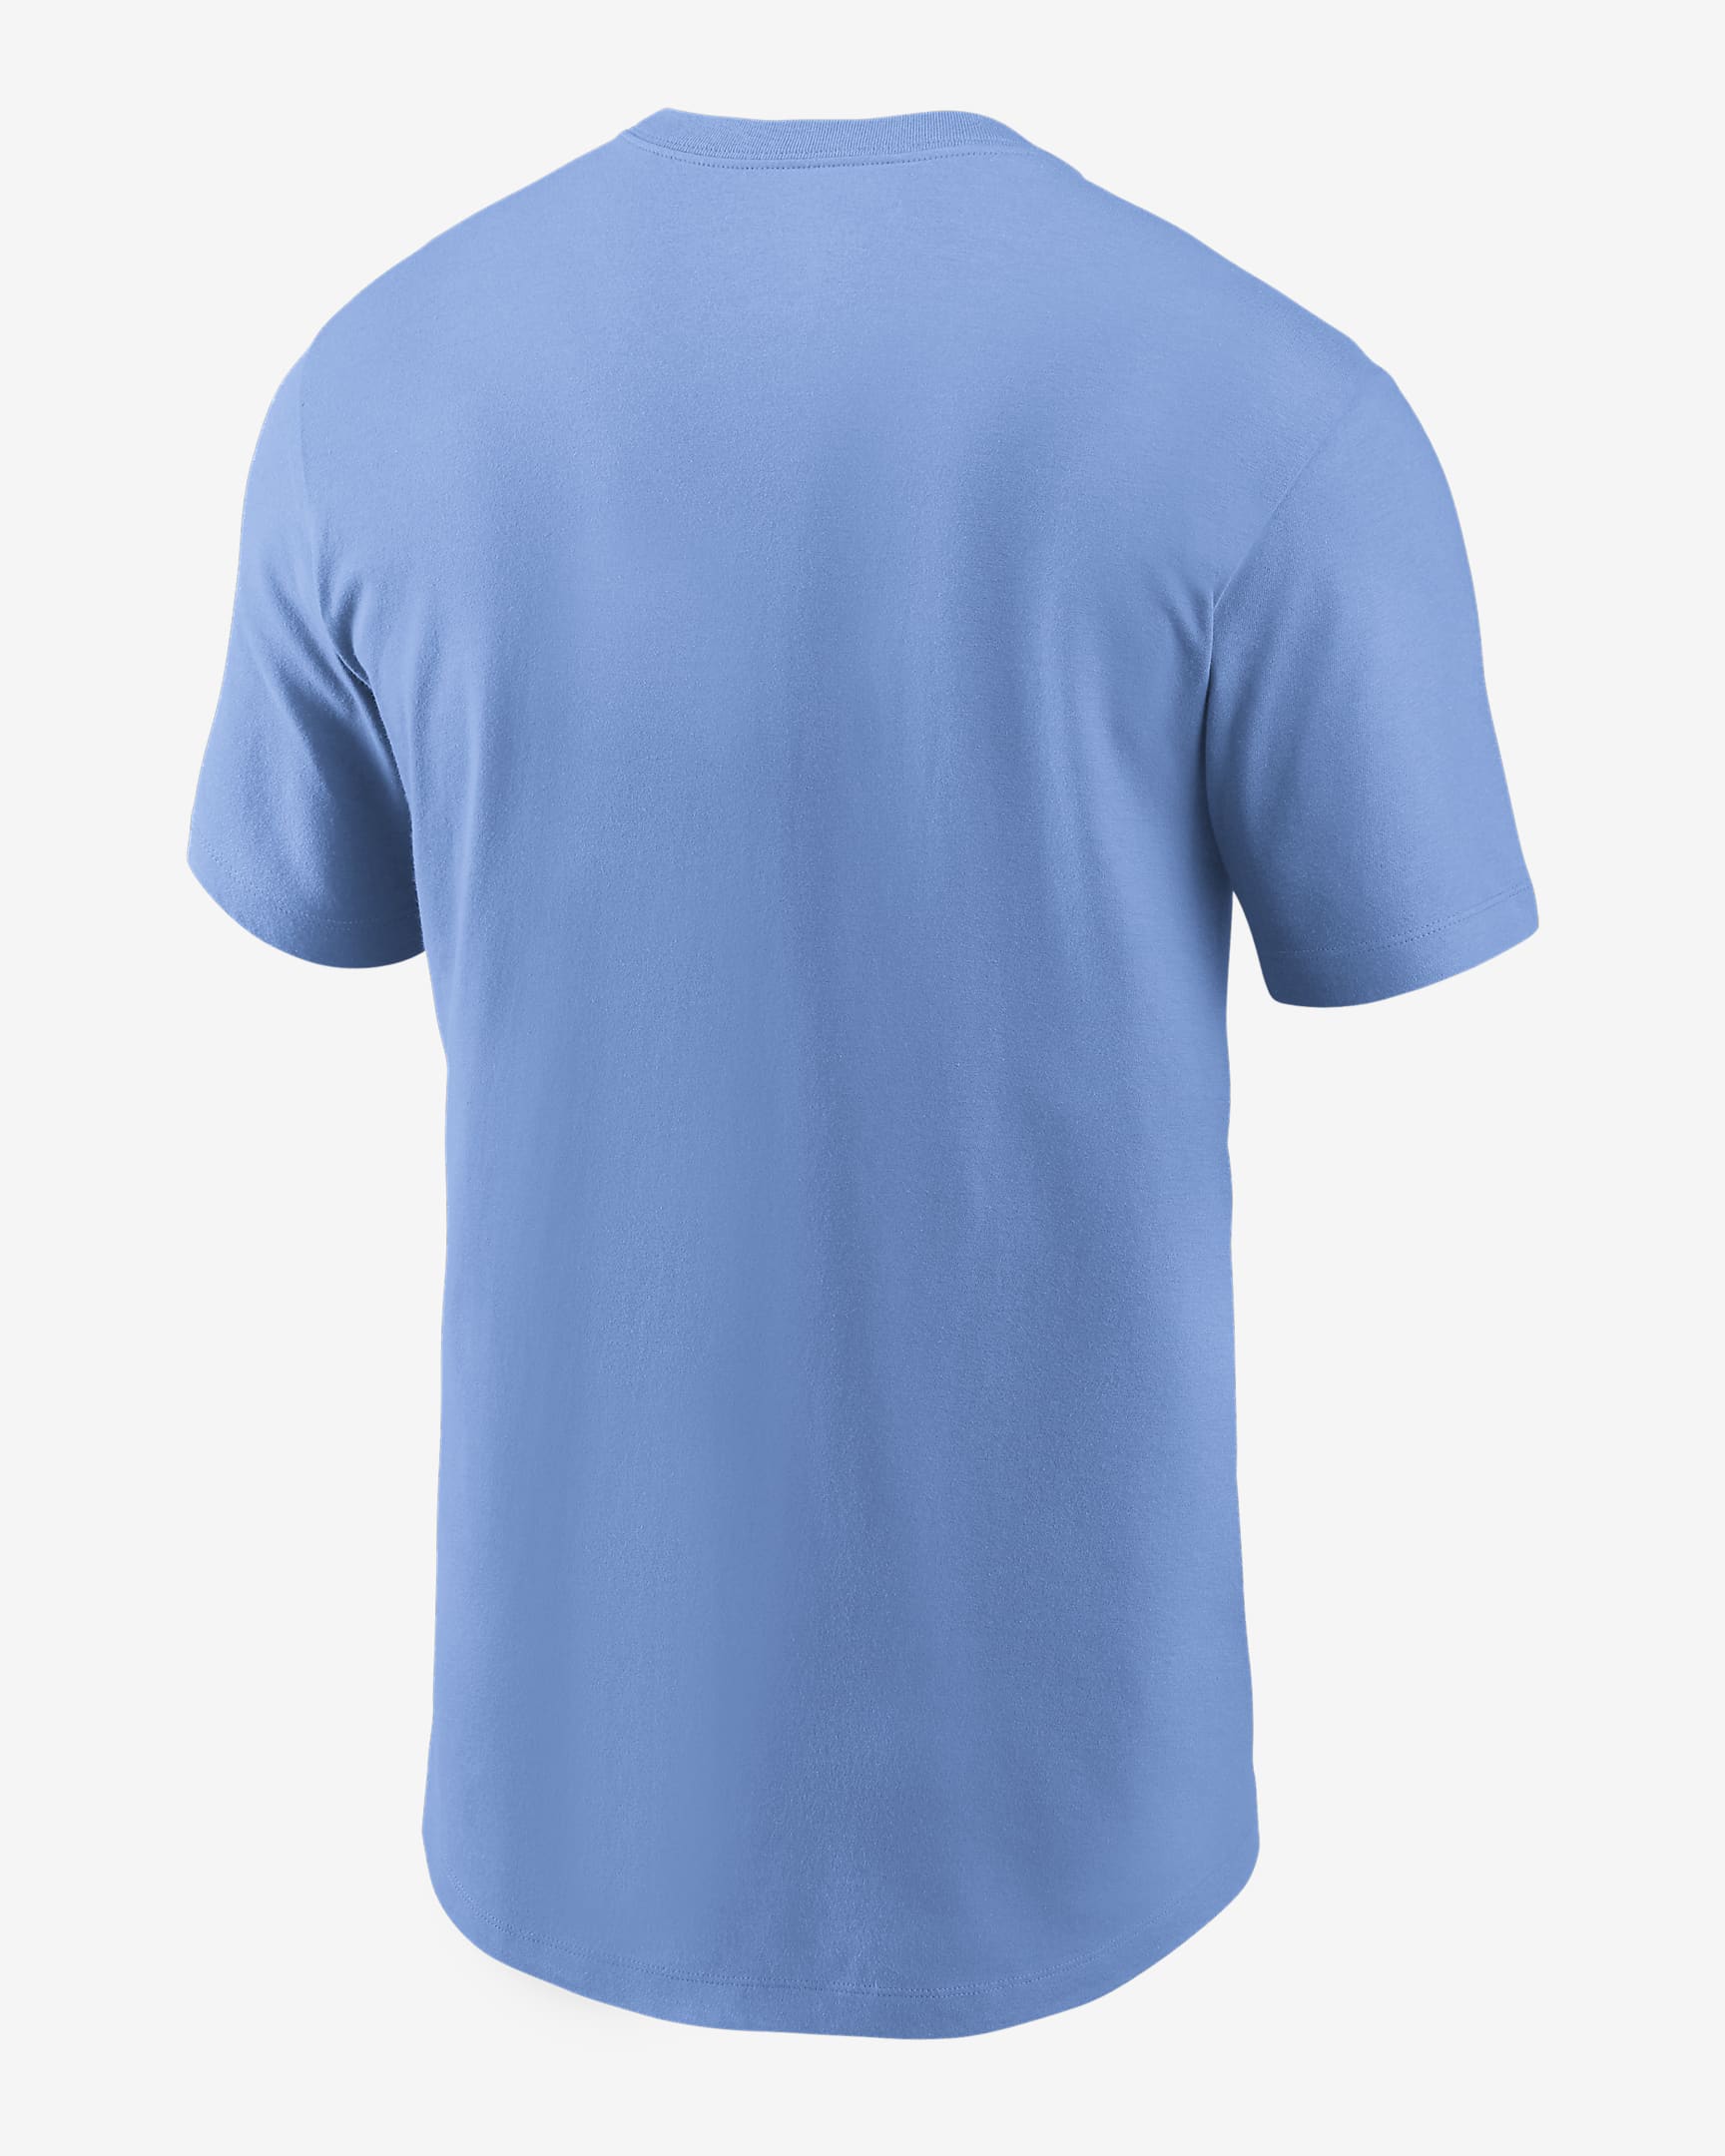 Nike 2020 American League East (MLB Tampa Bay Rays) Men's T-Shirt. Nike.com